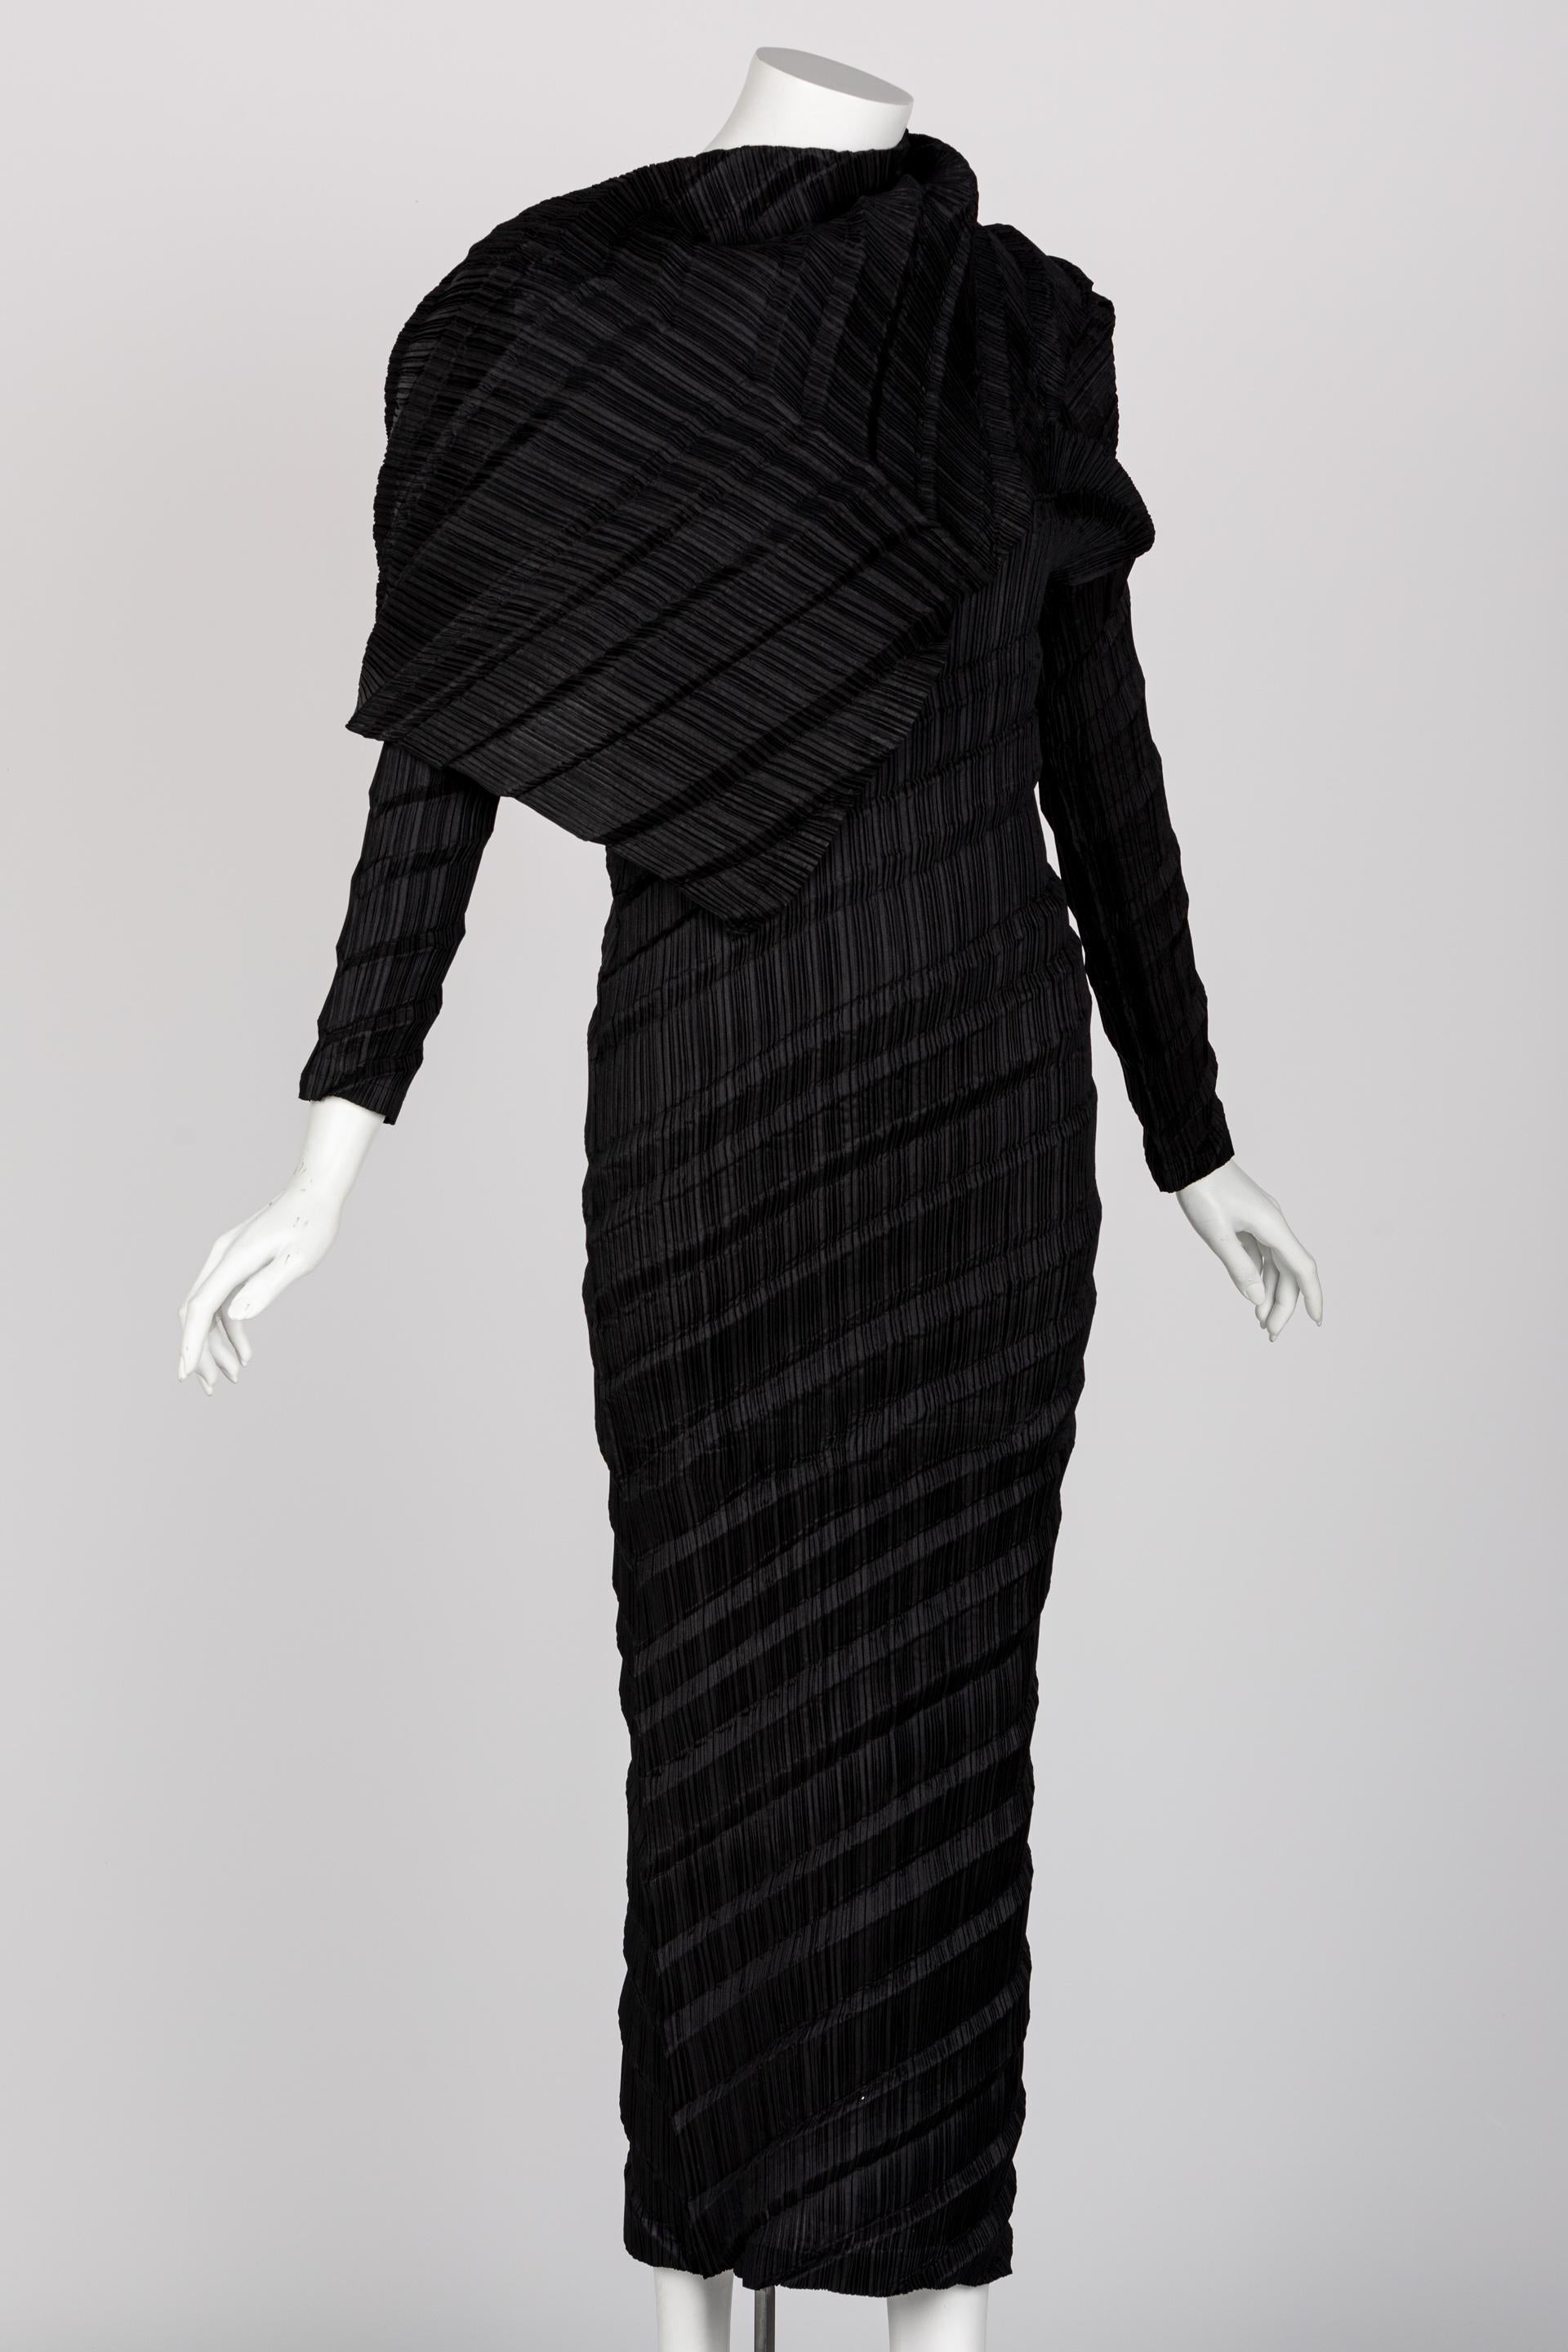 Issey Miyake Black Pleated Sculptural Dress, 1990s 5